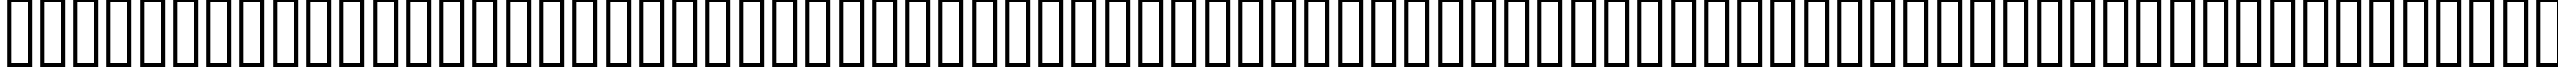 Пример написания английского алфавита шрифтом ABSALOM